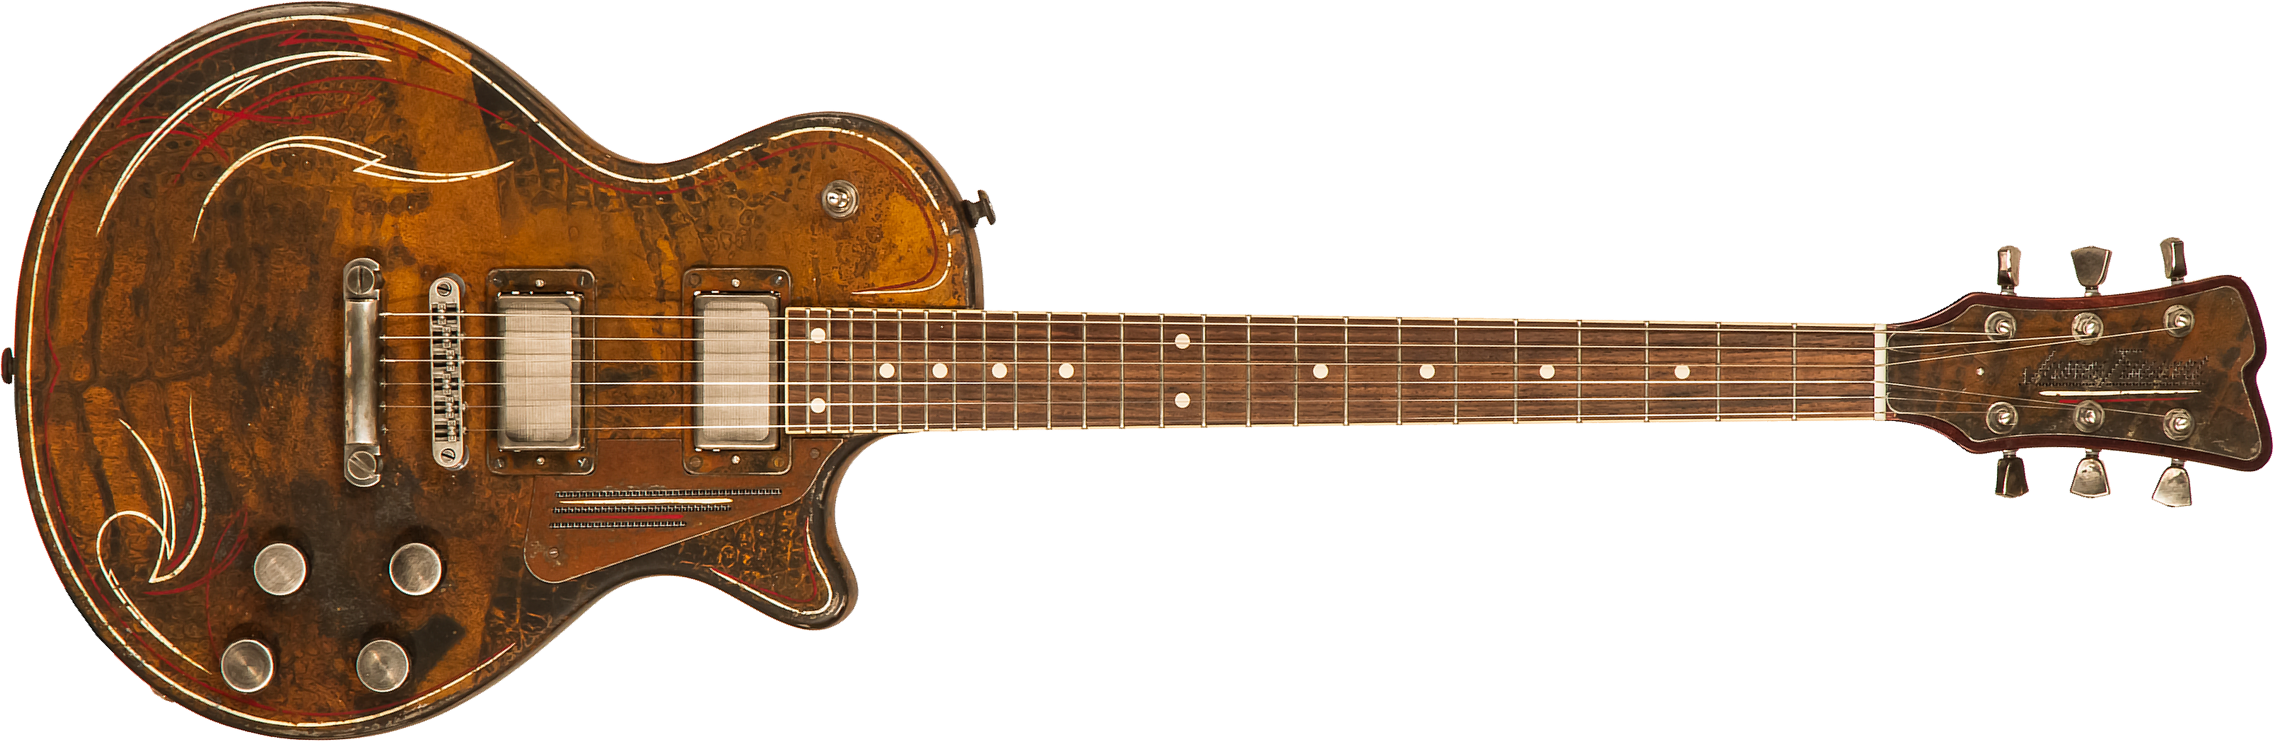 James Trussart Steeldeville Perf.back 2h Ht Rw #21171 - Rust O Matic Pinstriped - Enkel gesneden elektrische gitaar - Main picture